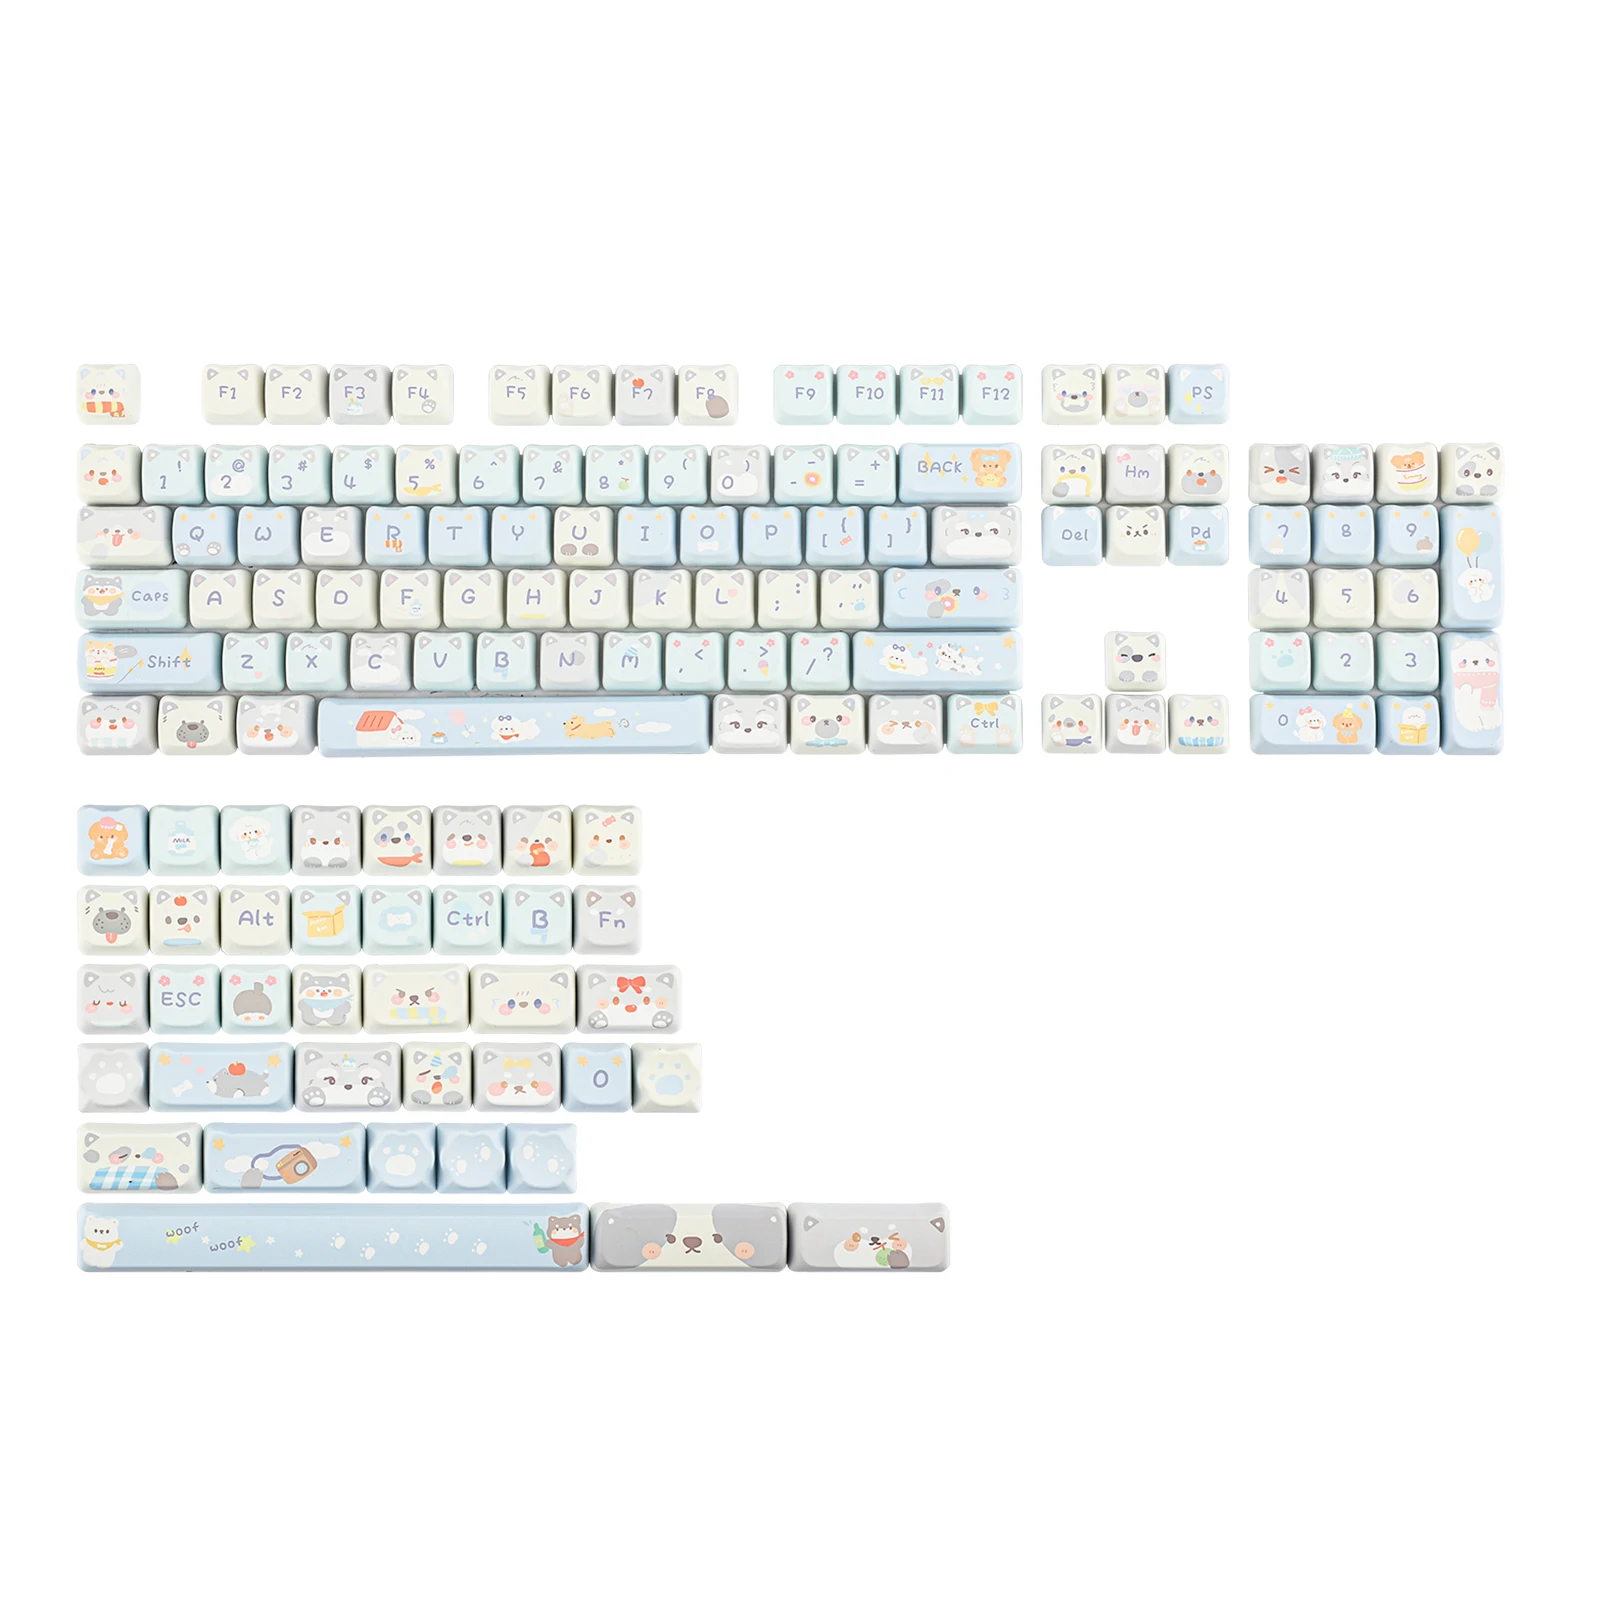 

KiiBOOM WoofWoof Squad Keycap Set 141 keys MAO Profile 5-Side Dye-Sublimation PBT for ANSI Layout Mechanical Keyboard